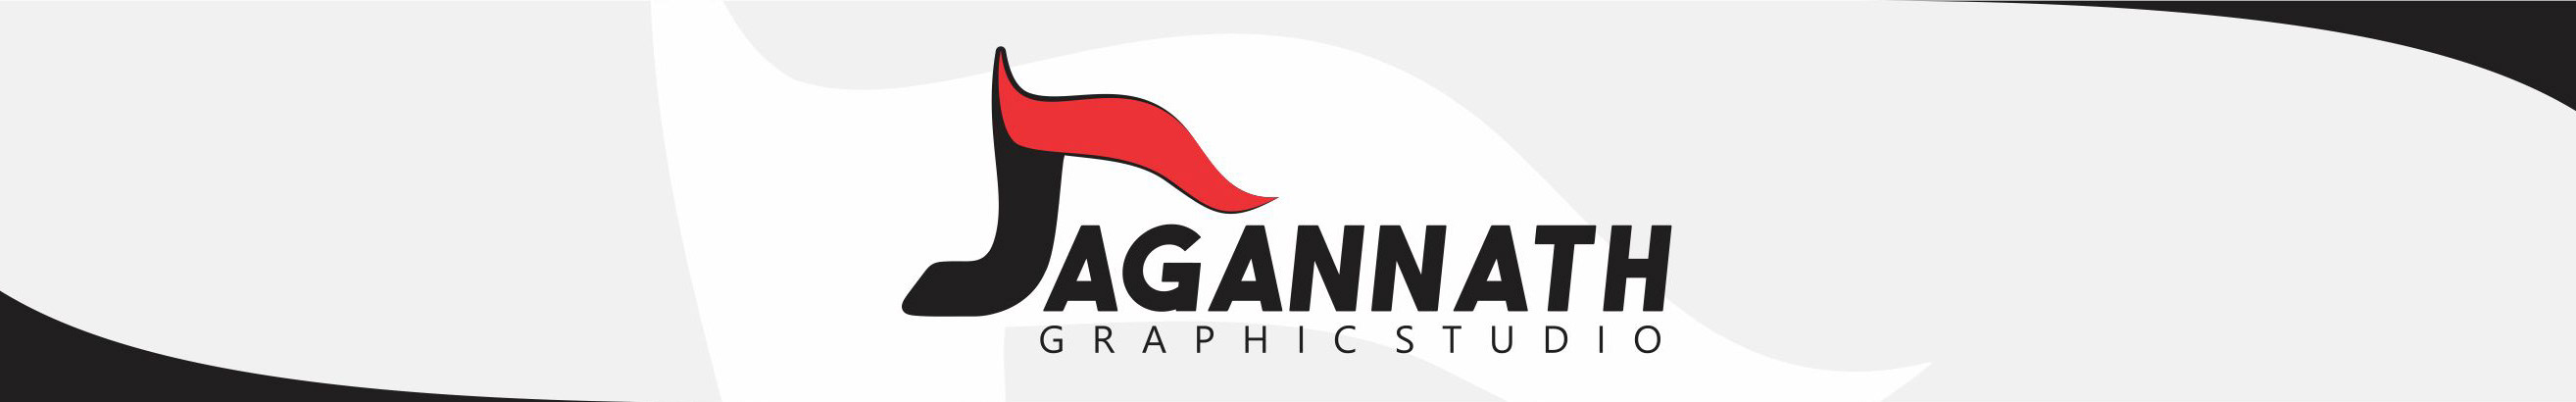 Banner de perfil de Jagannath Graphic studio